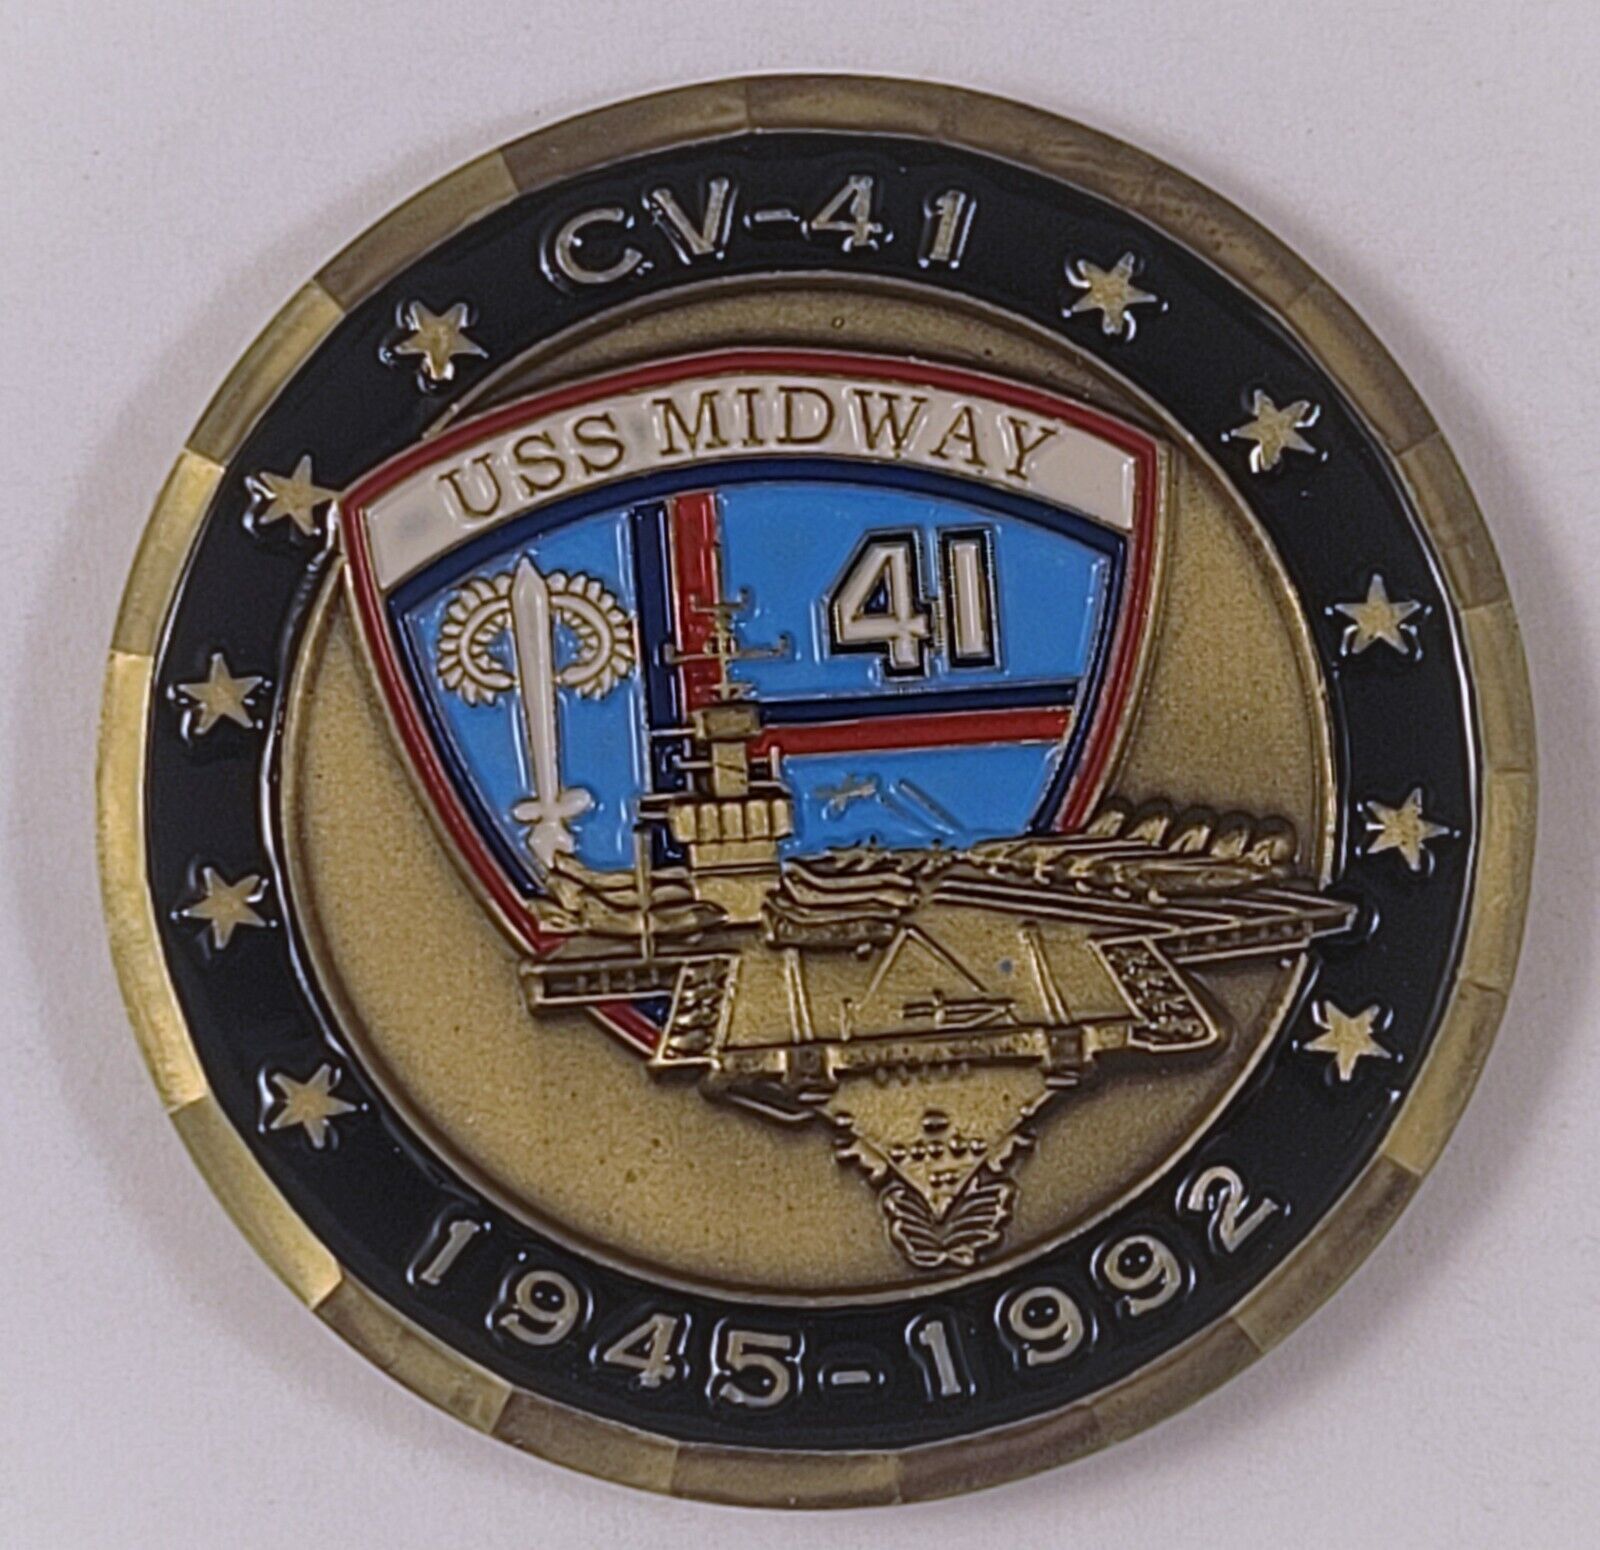 NEW USN - U.S. NAVY - USS MIDWAY -  CV-41  - Challenge Coin - 